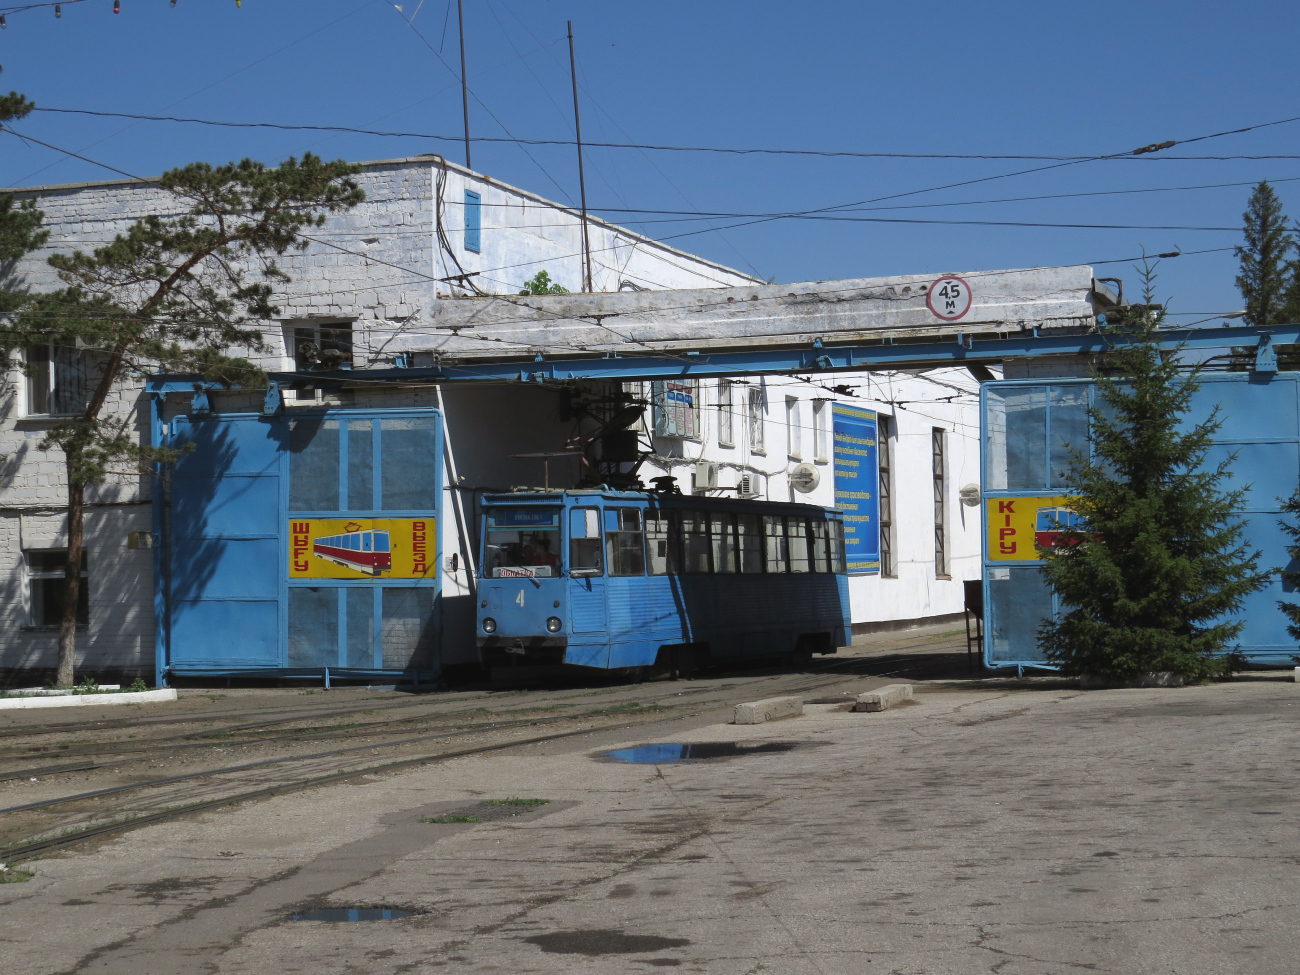 Павлодар, 71-605 (КТМ-5М3) № 4; Павлодар — Трамвайное депо